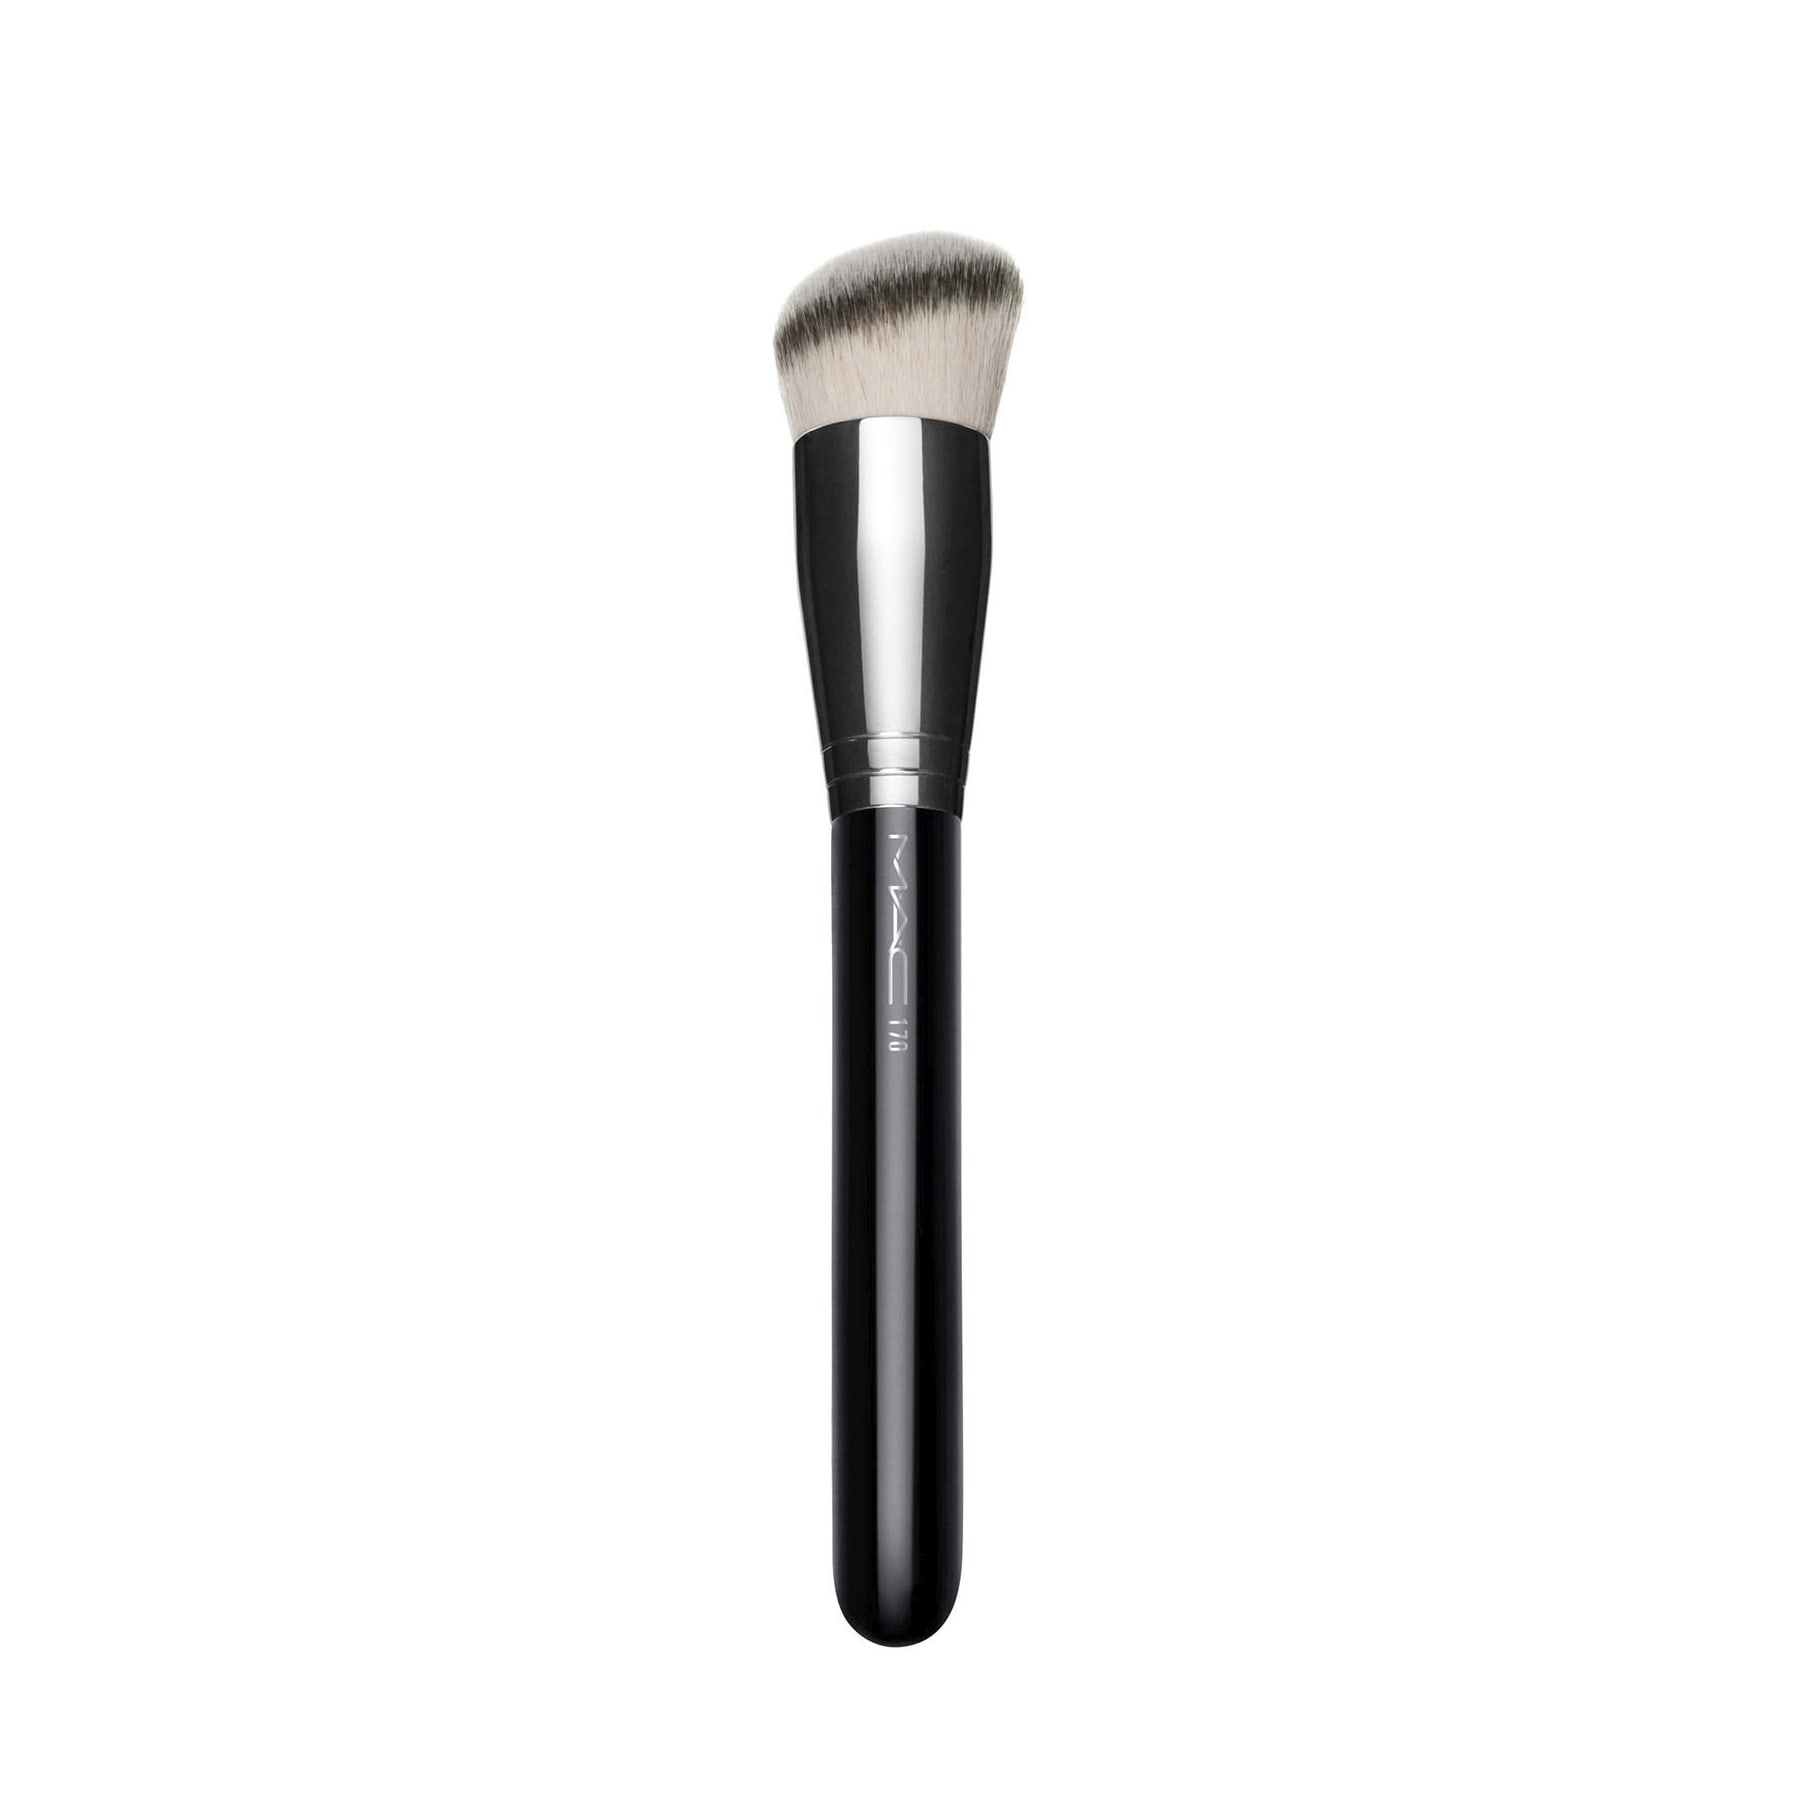 170 Synthetic Bounded Slant Brush Applicators från MAC Cosmetics